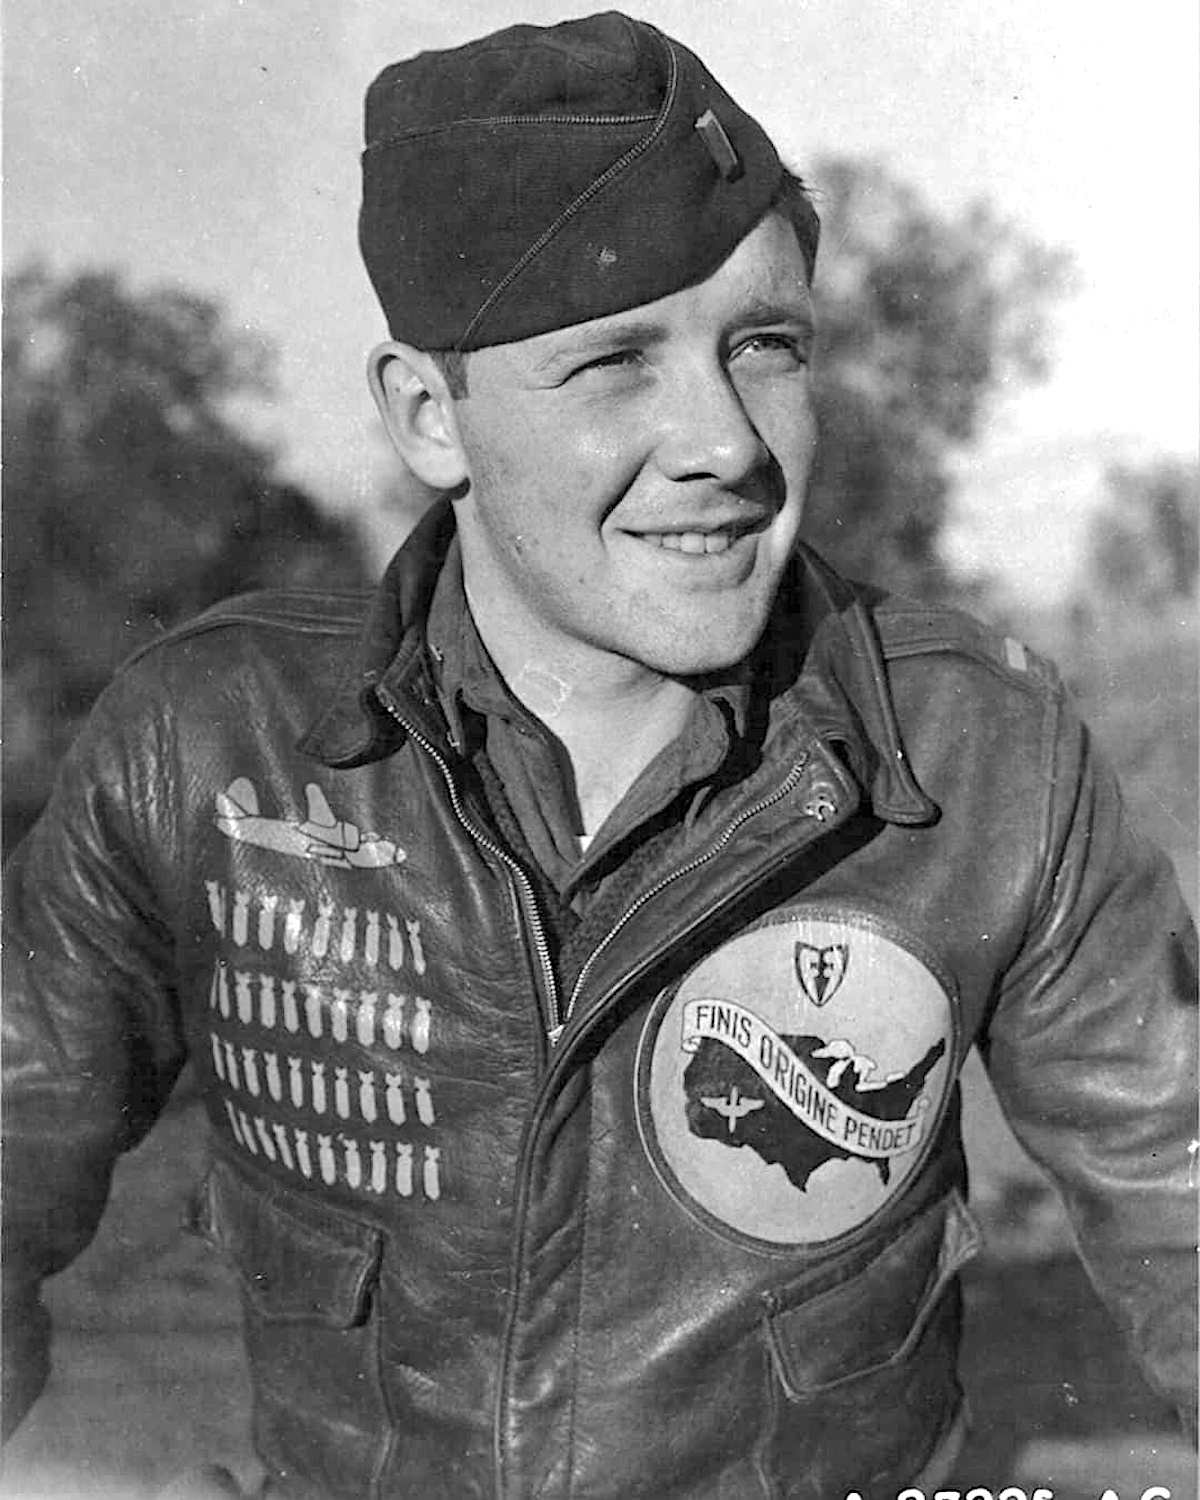 441st Bomb Squadron patch painted | Vintage Leather Jackets Forum